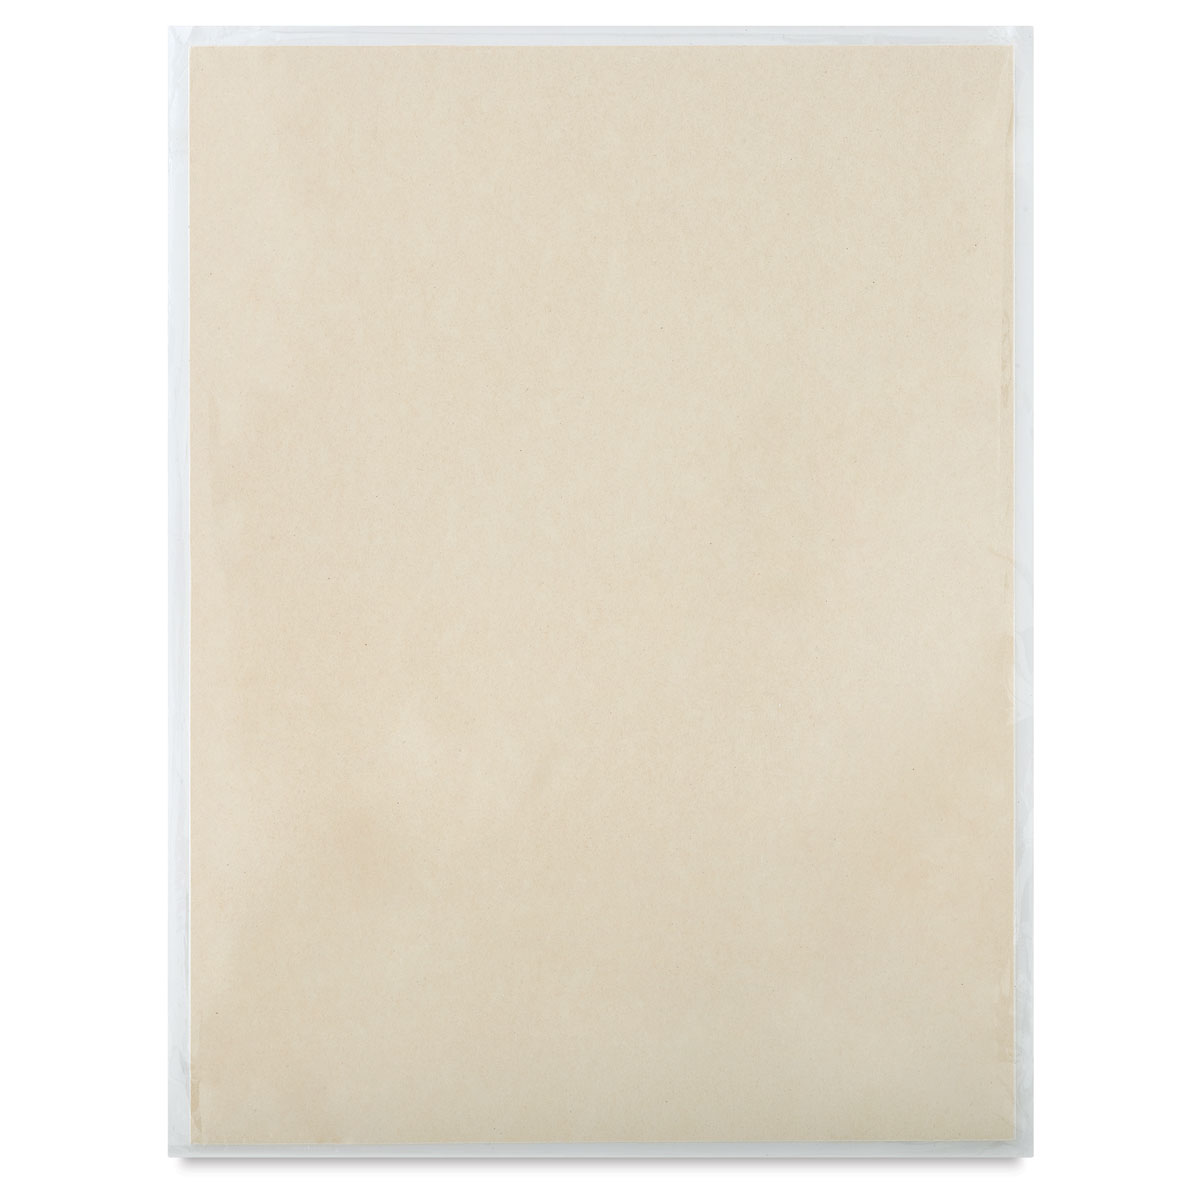 UART Sanded Pastel Paper Pad - 400 Grit, 9 inch x 12 inch, 10 Sheets, Beige